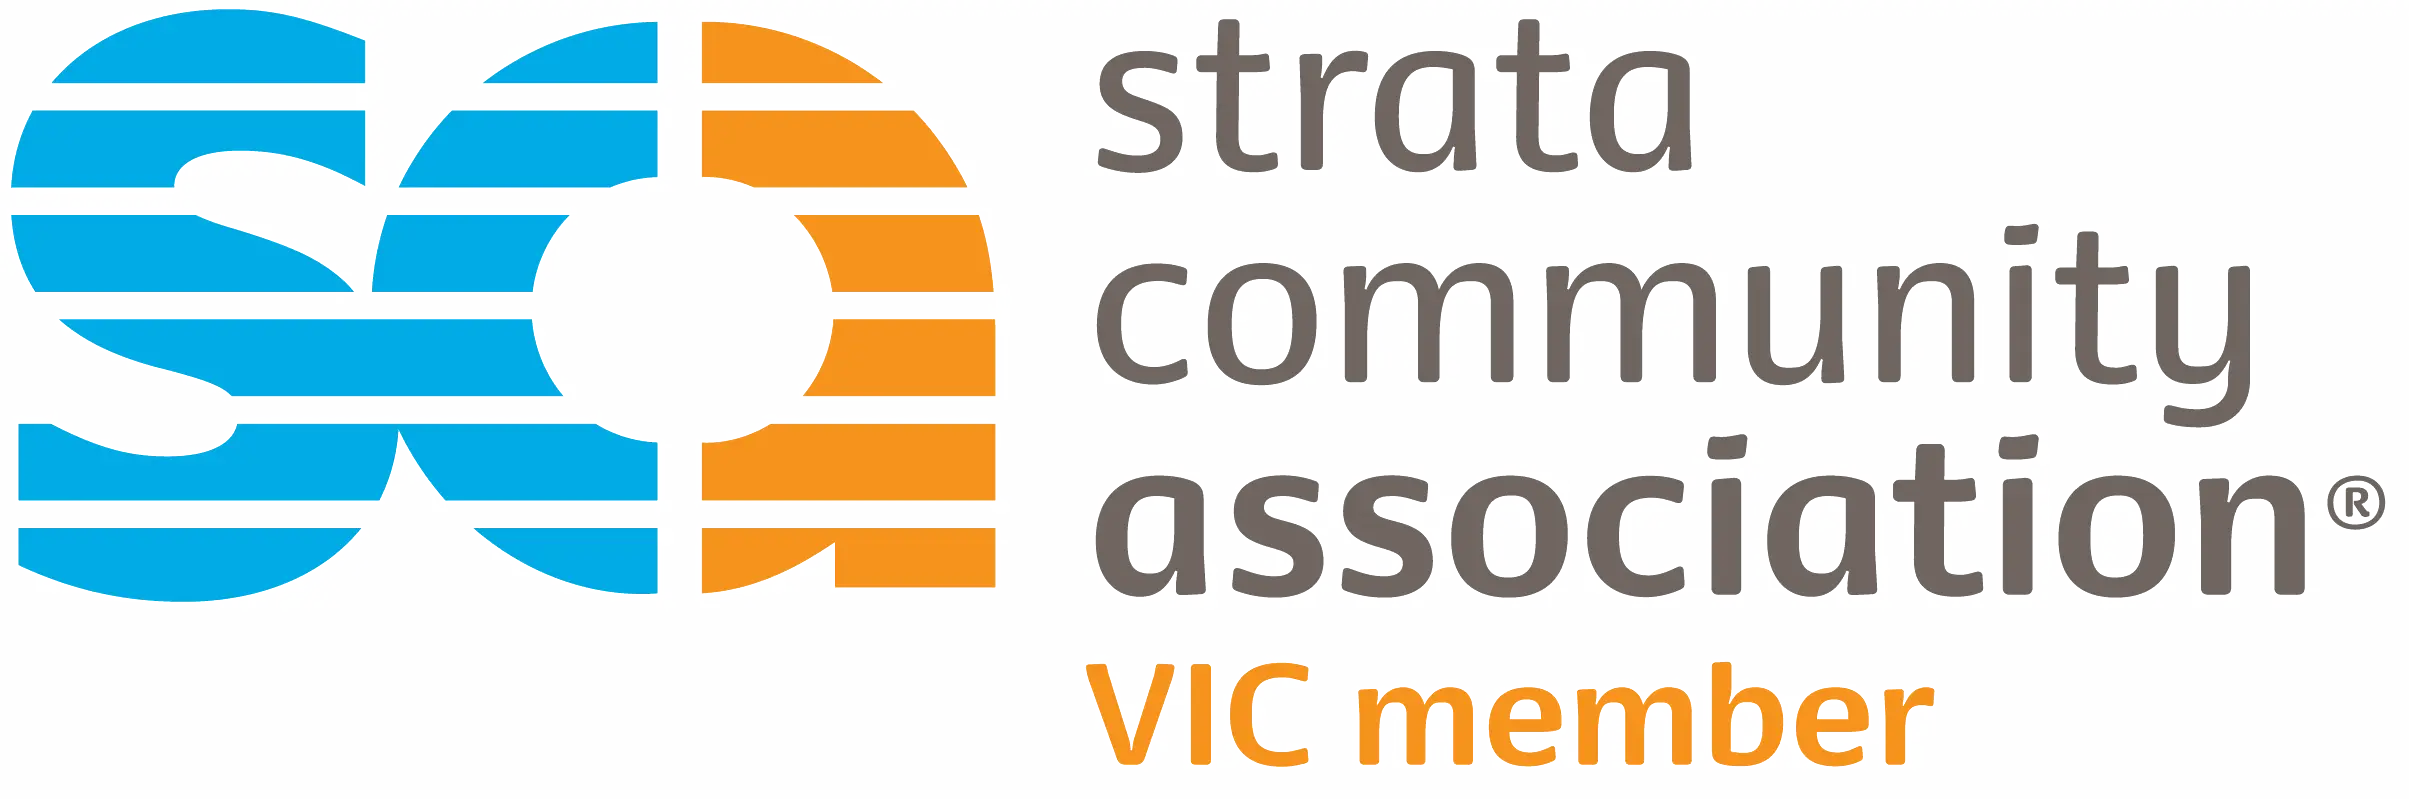 strata-community-association